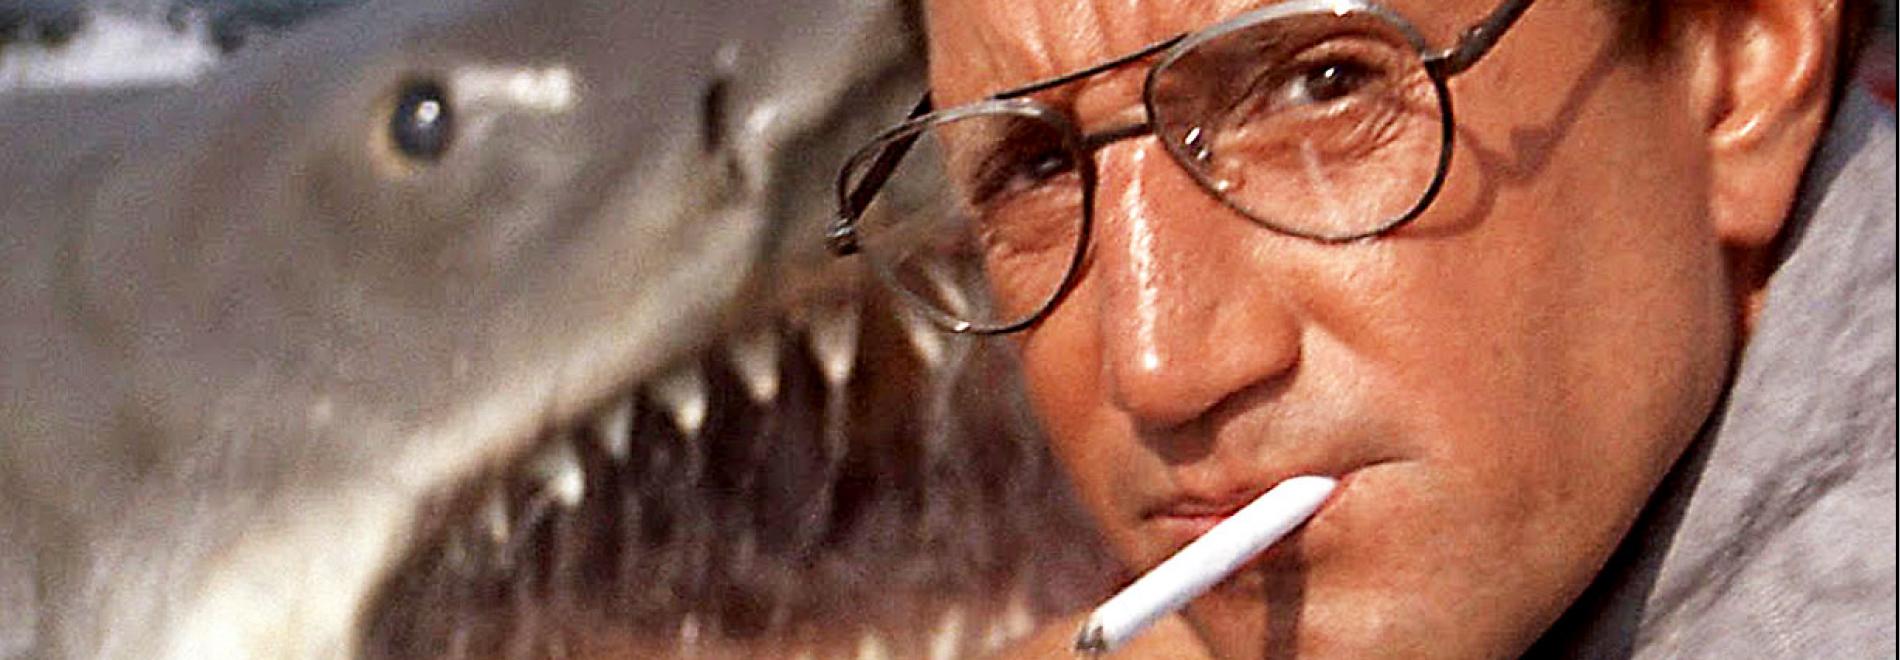 Jaws (Steven Spielberg, 1975)